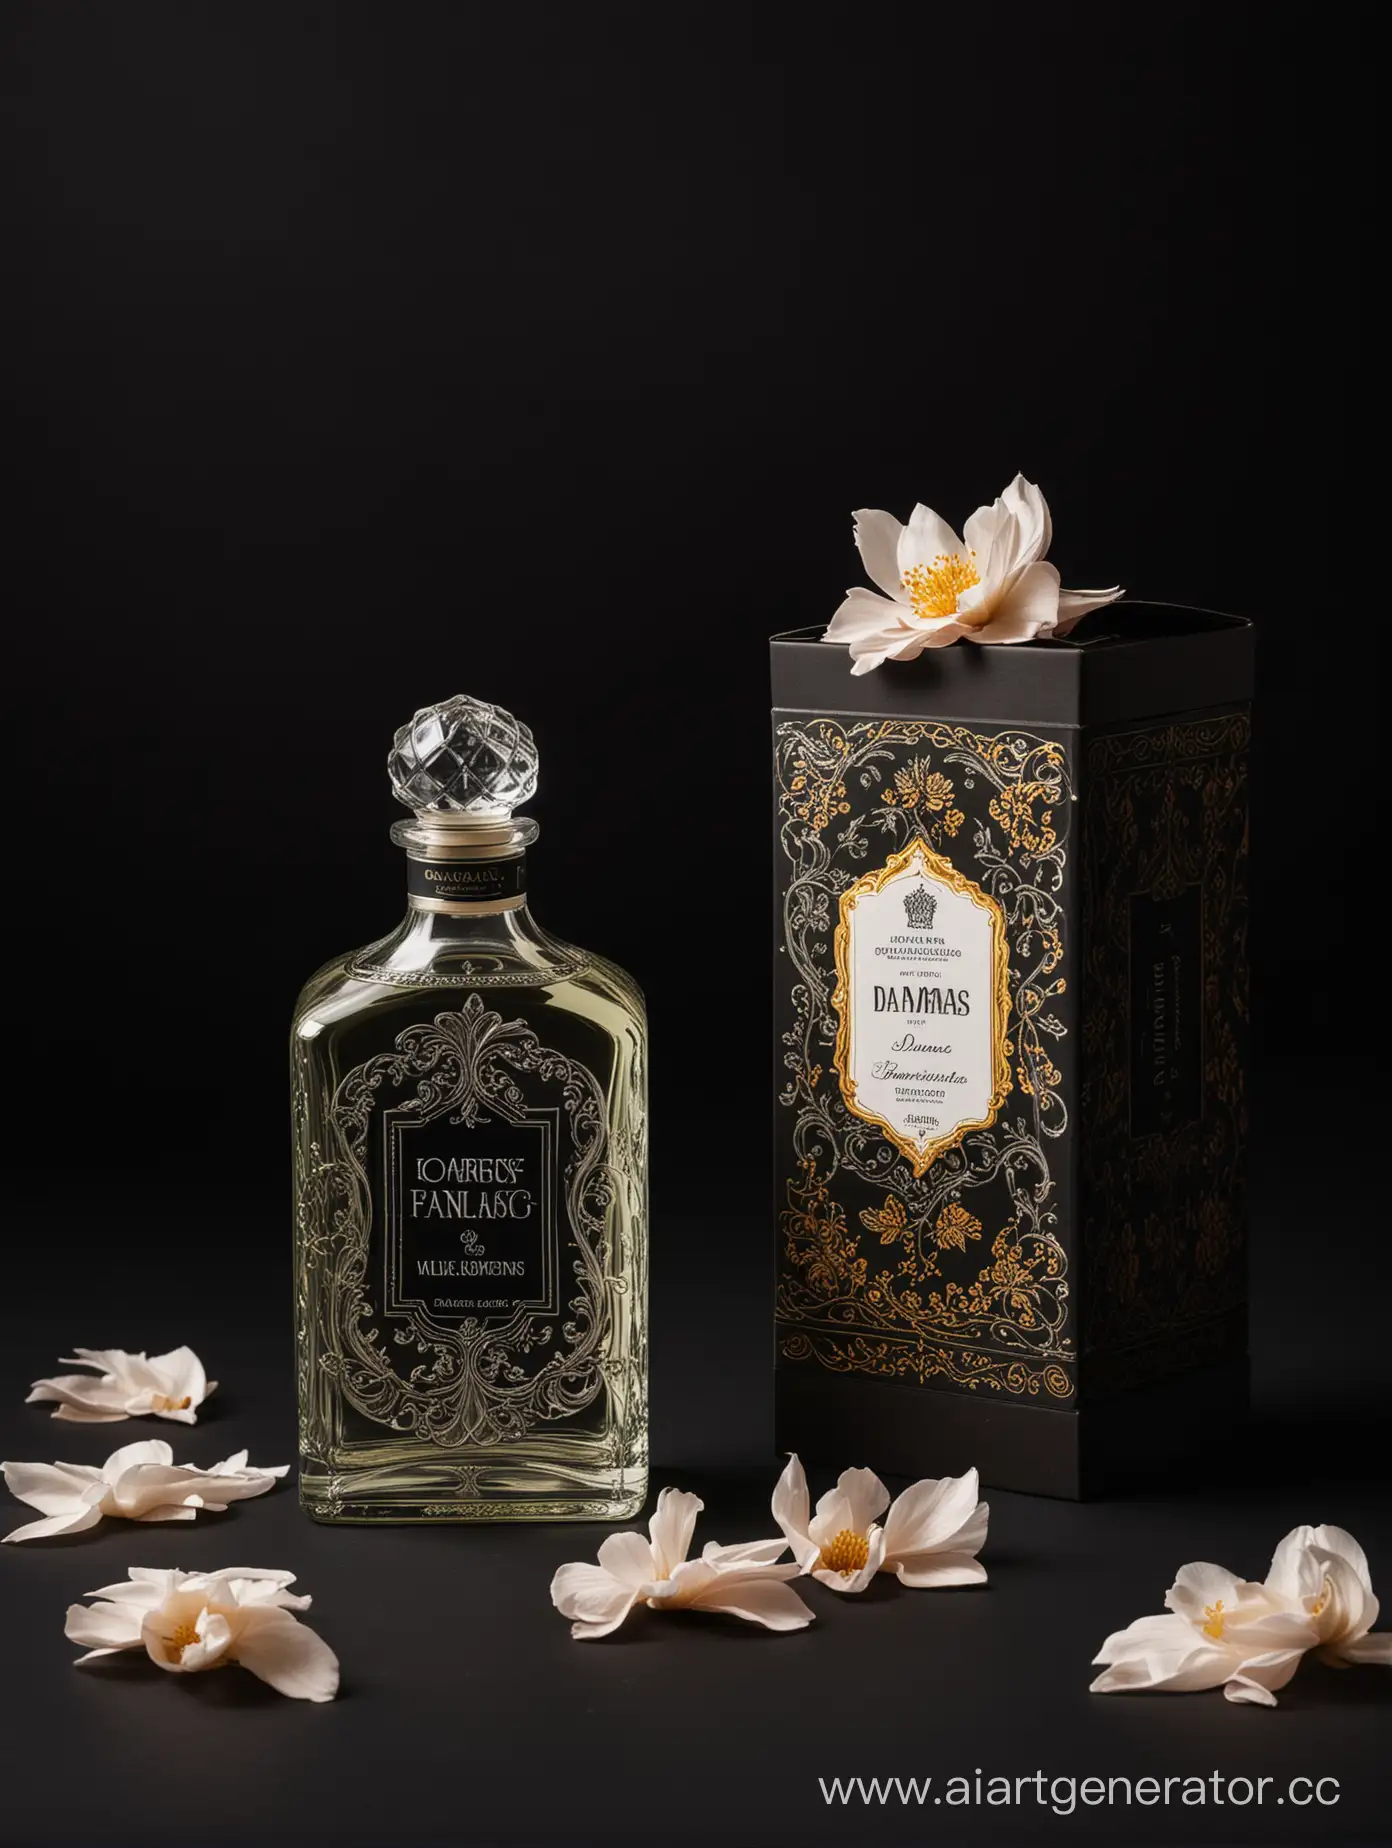 Damas-Cologne-Bottle-and-Demetrios-Farmakopoulos-Flemish-Baroque-Box-on-Black-Background